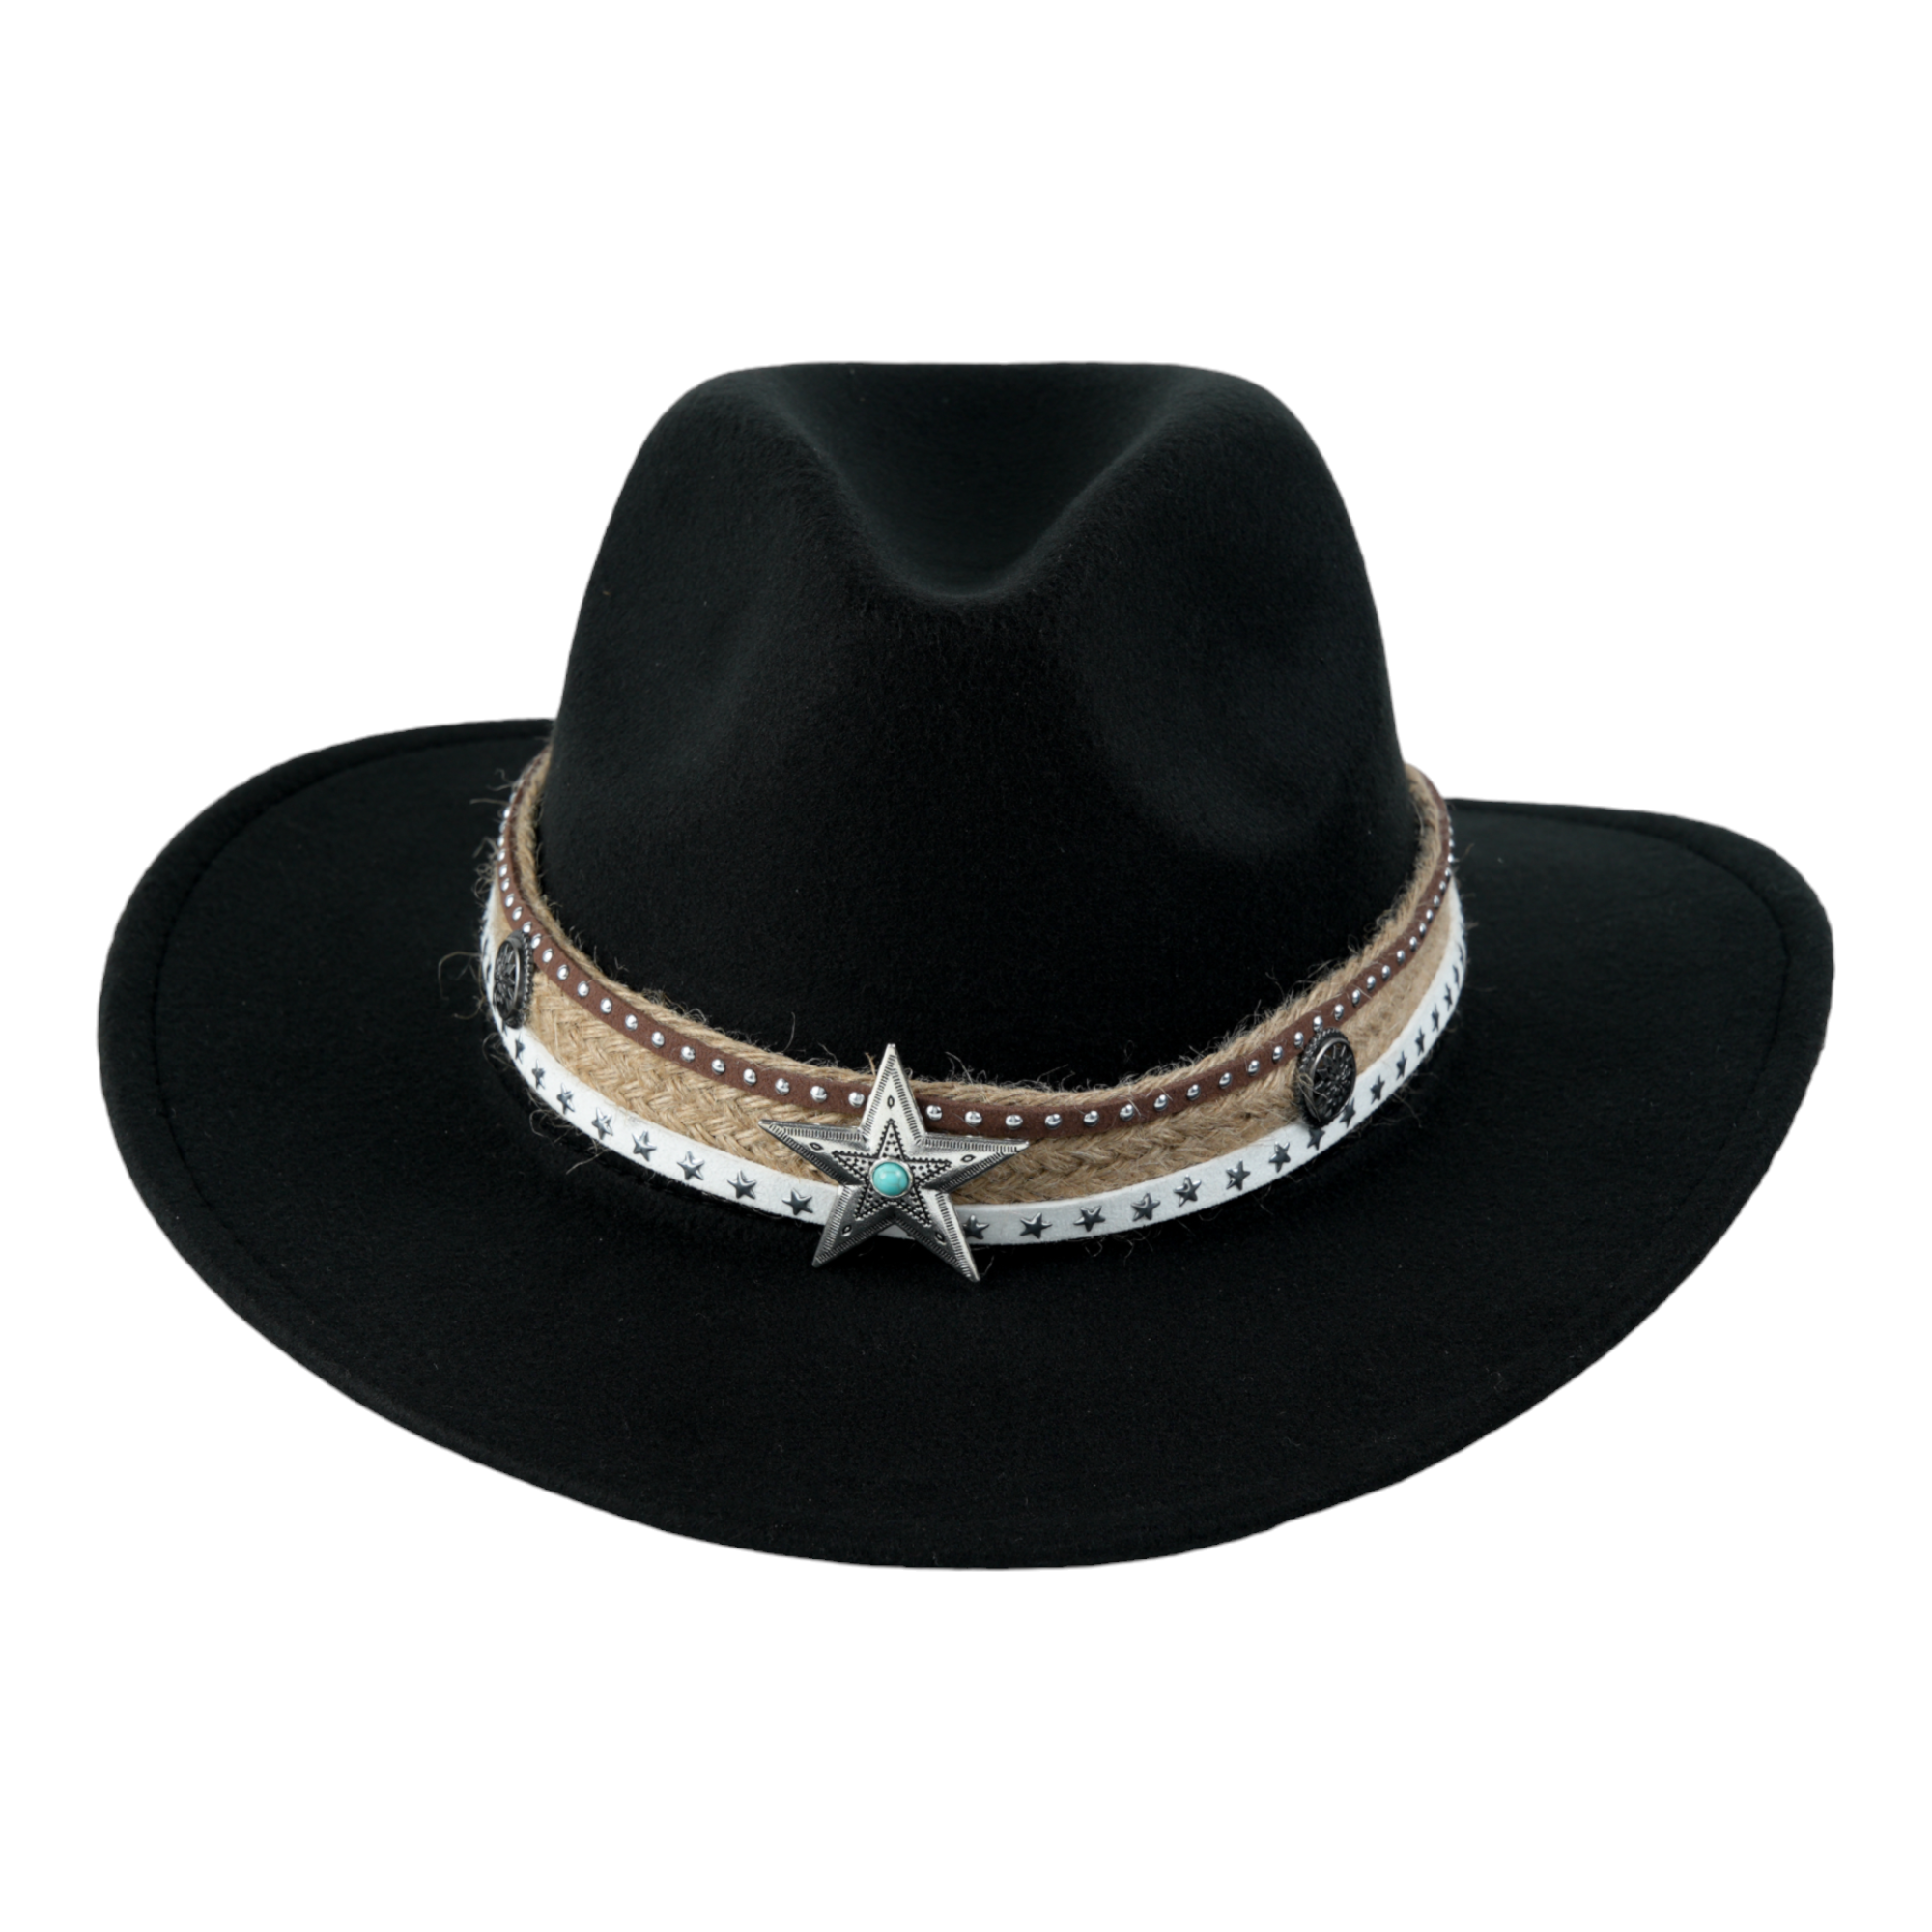 Chokore Cowboy Hat with Jute Band (Black)